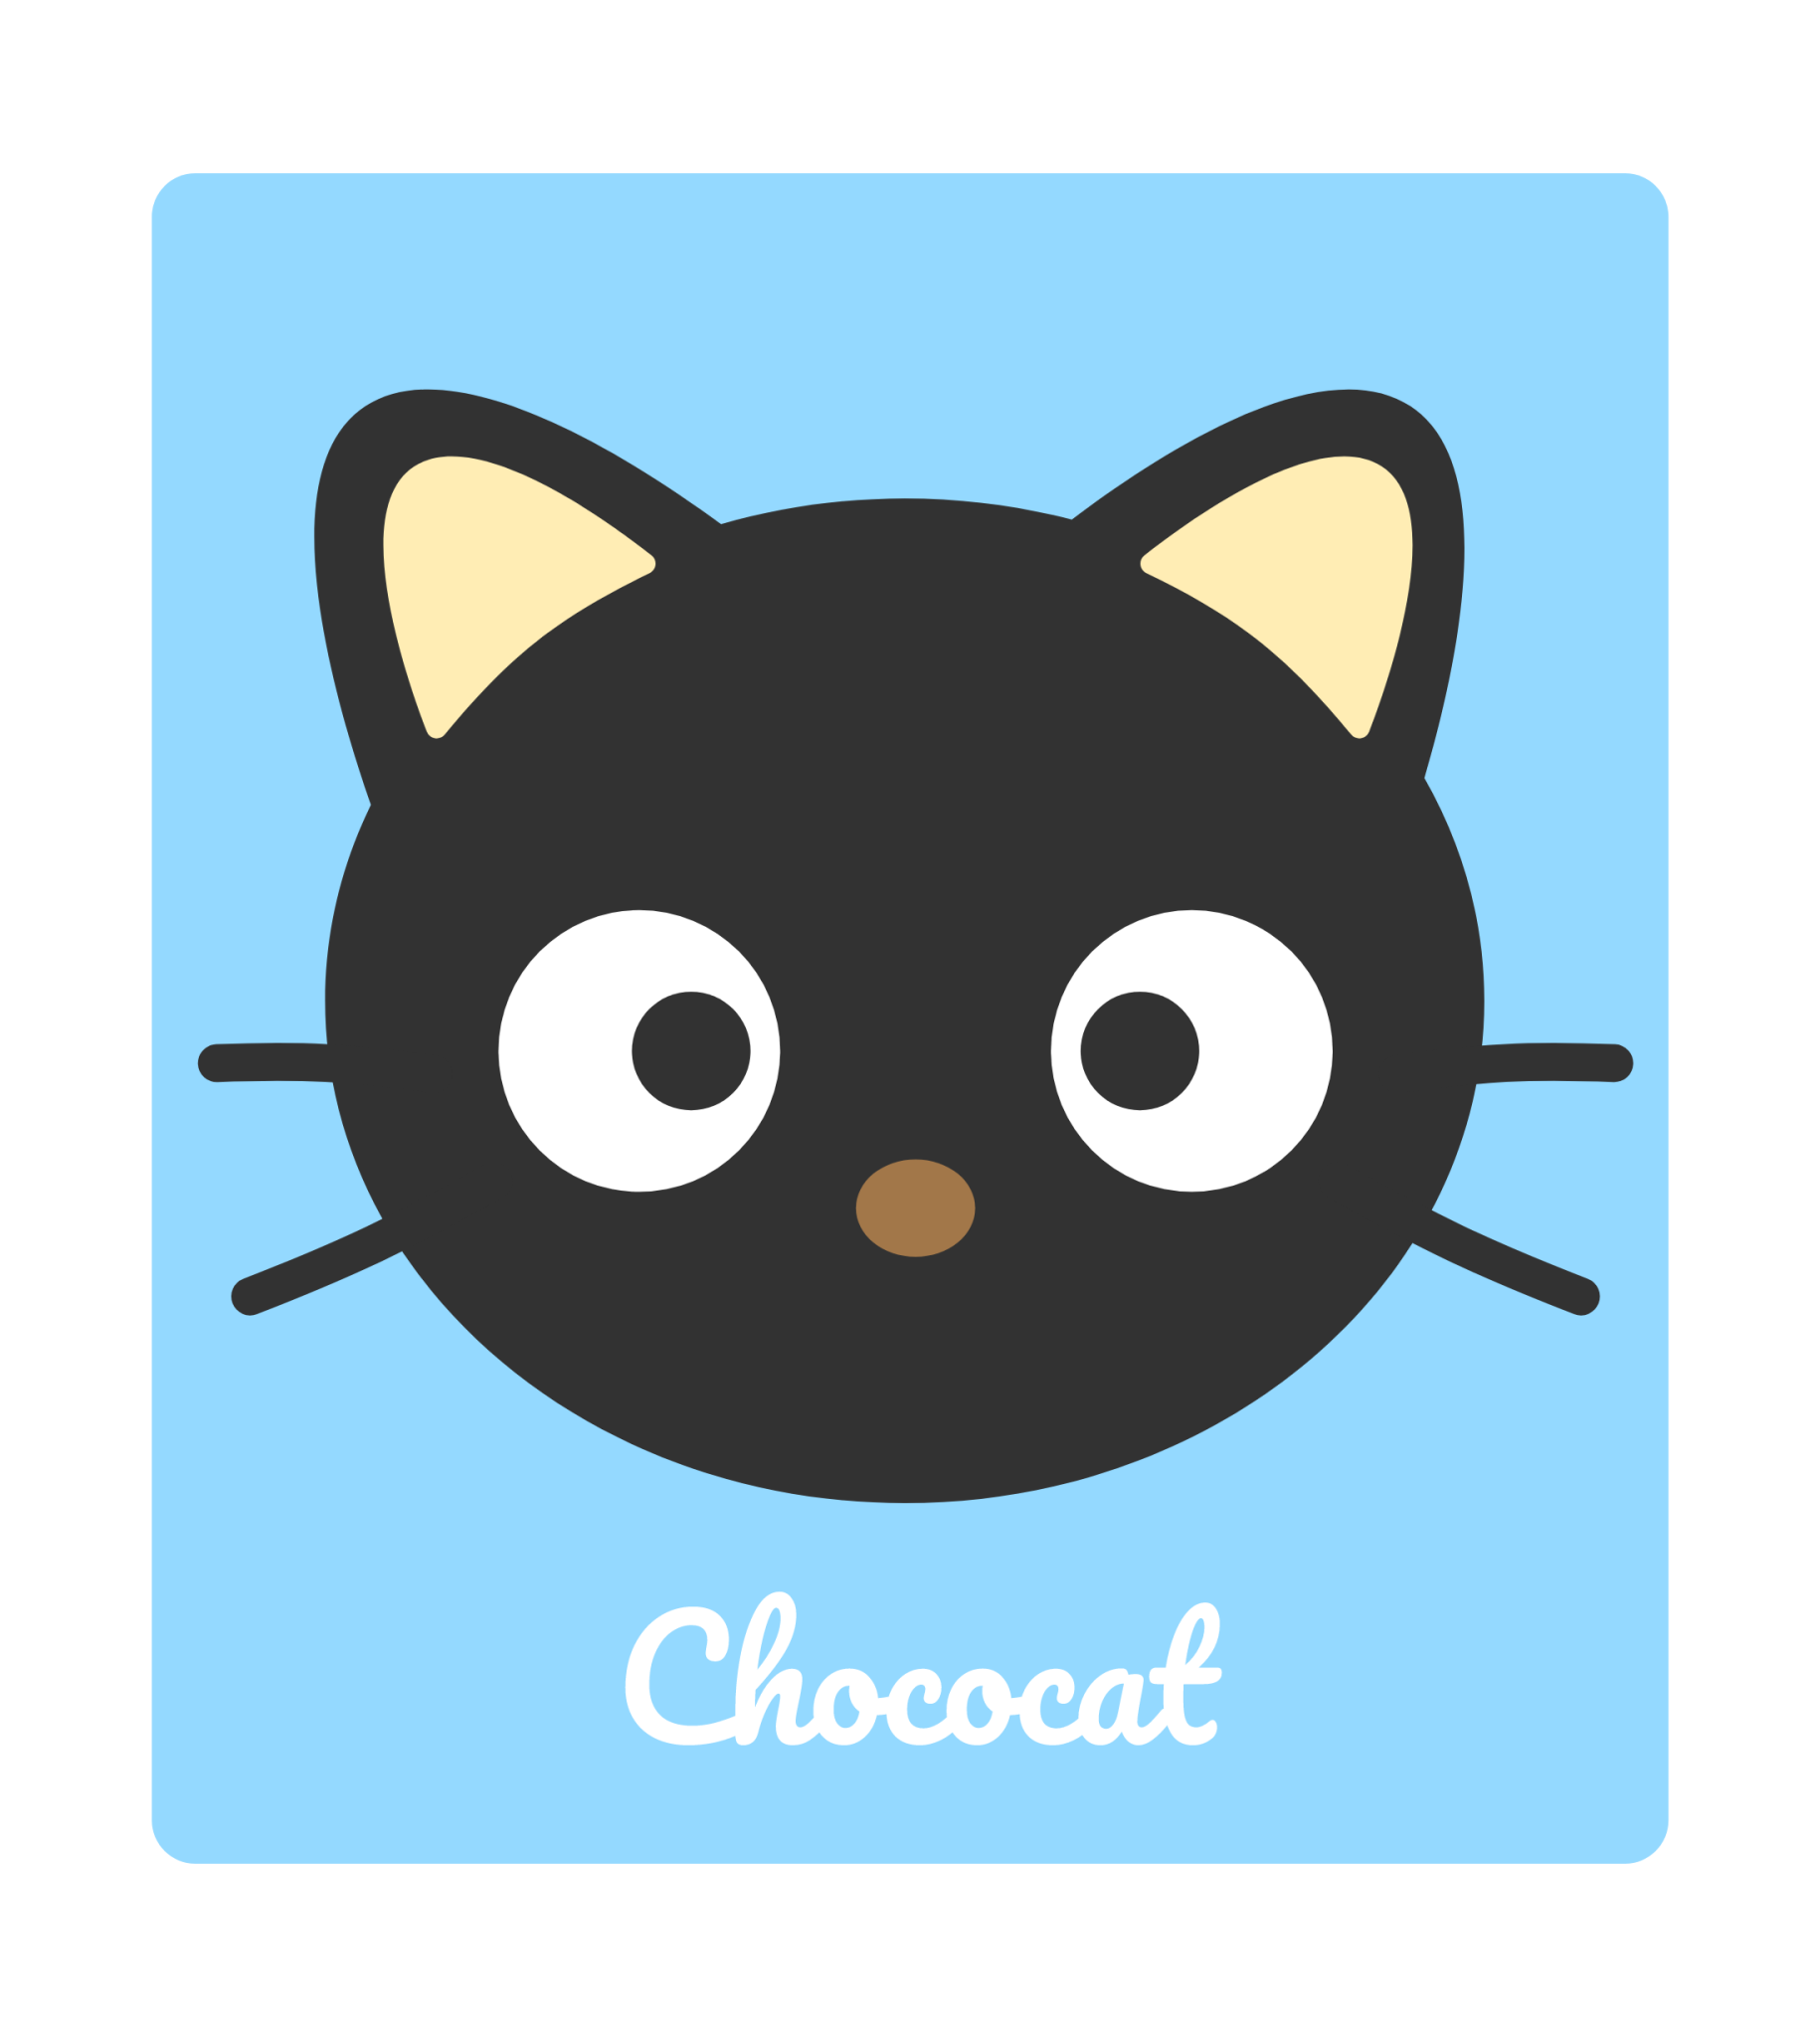 Love Chococat | Just another WordPress.com weblog